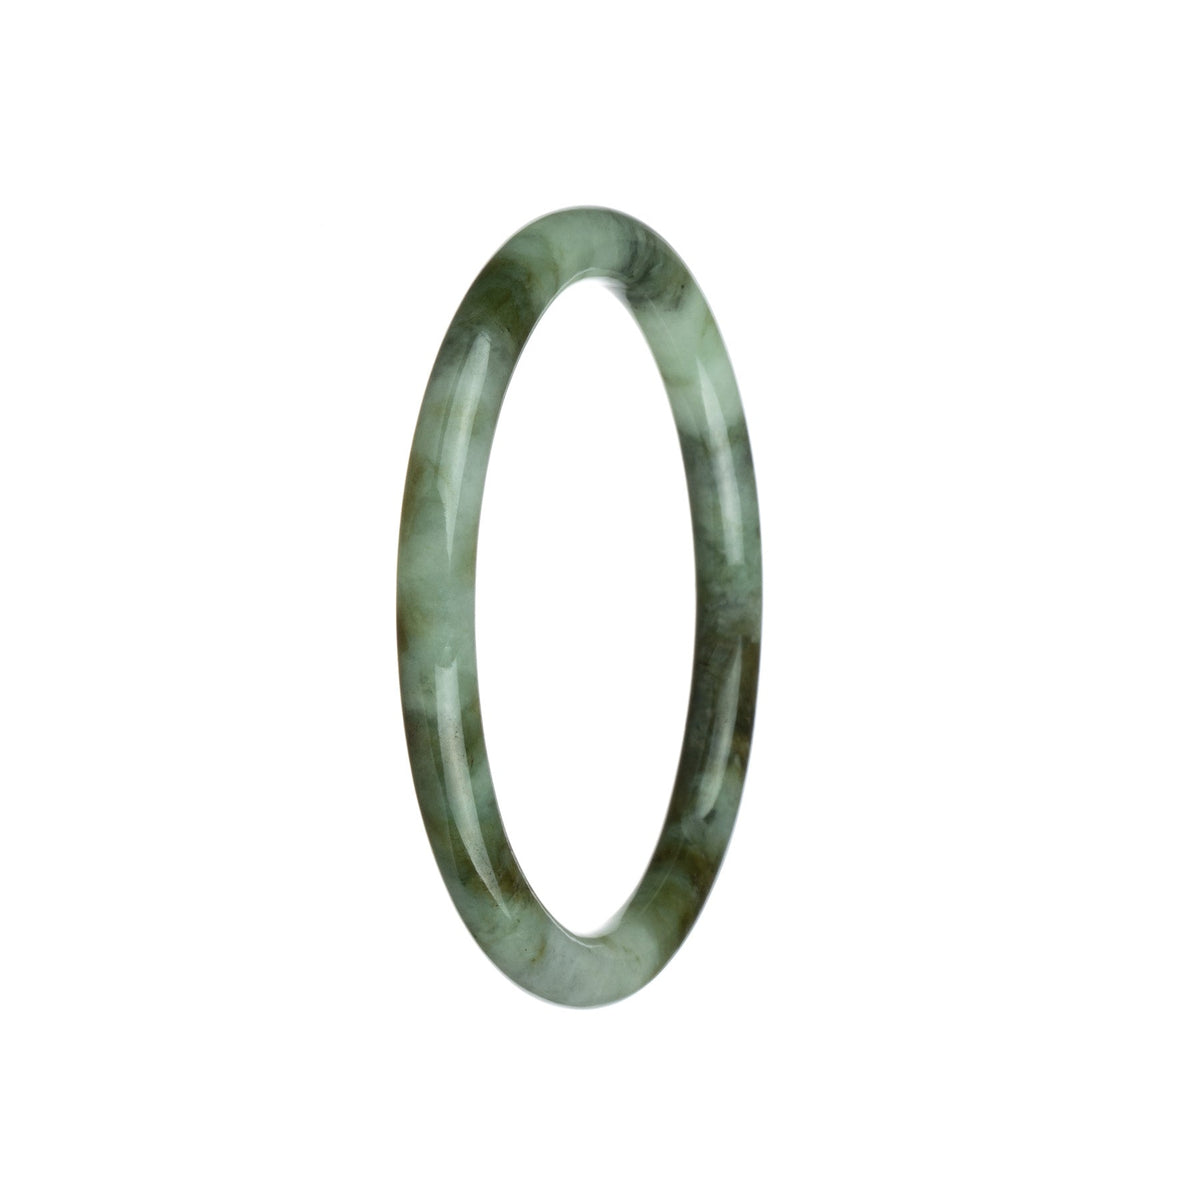 A petite round jadeite jade bracelet in pale green and brown pattern.